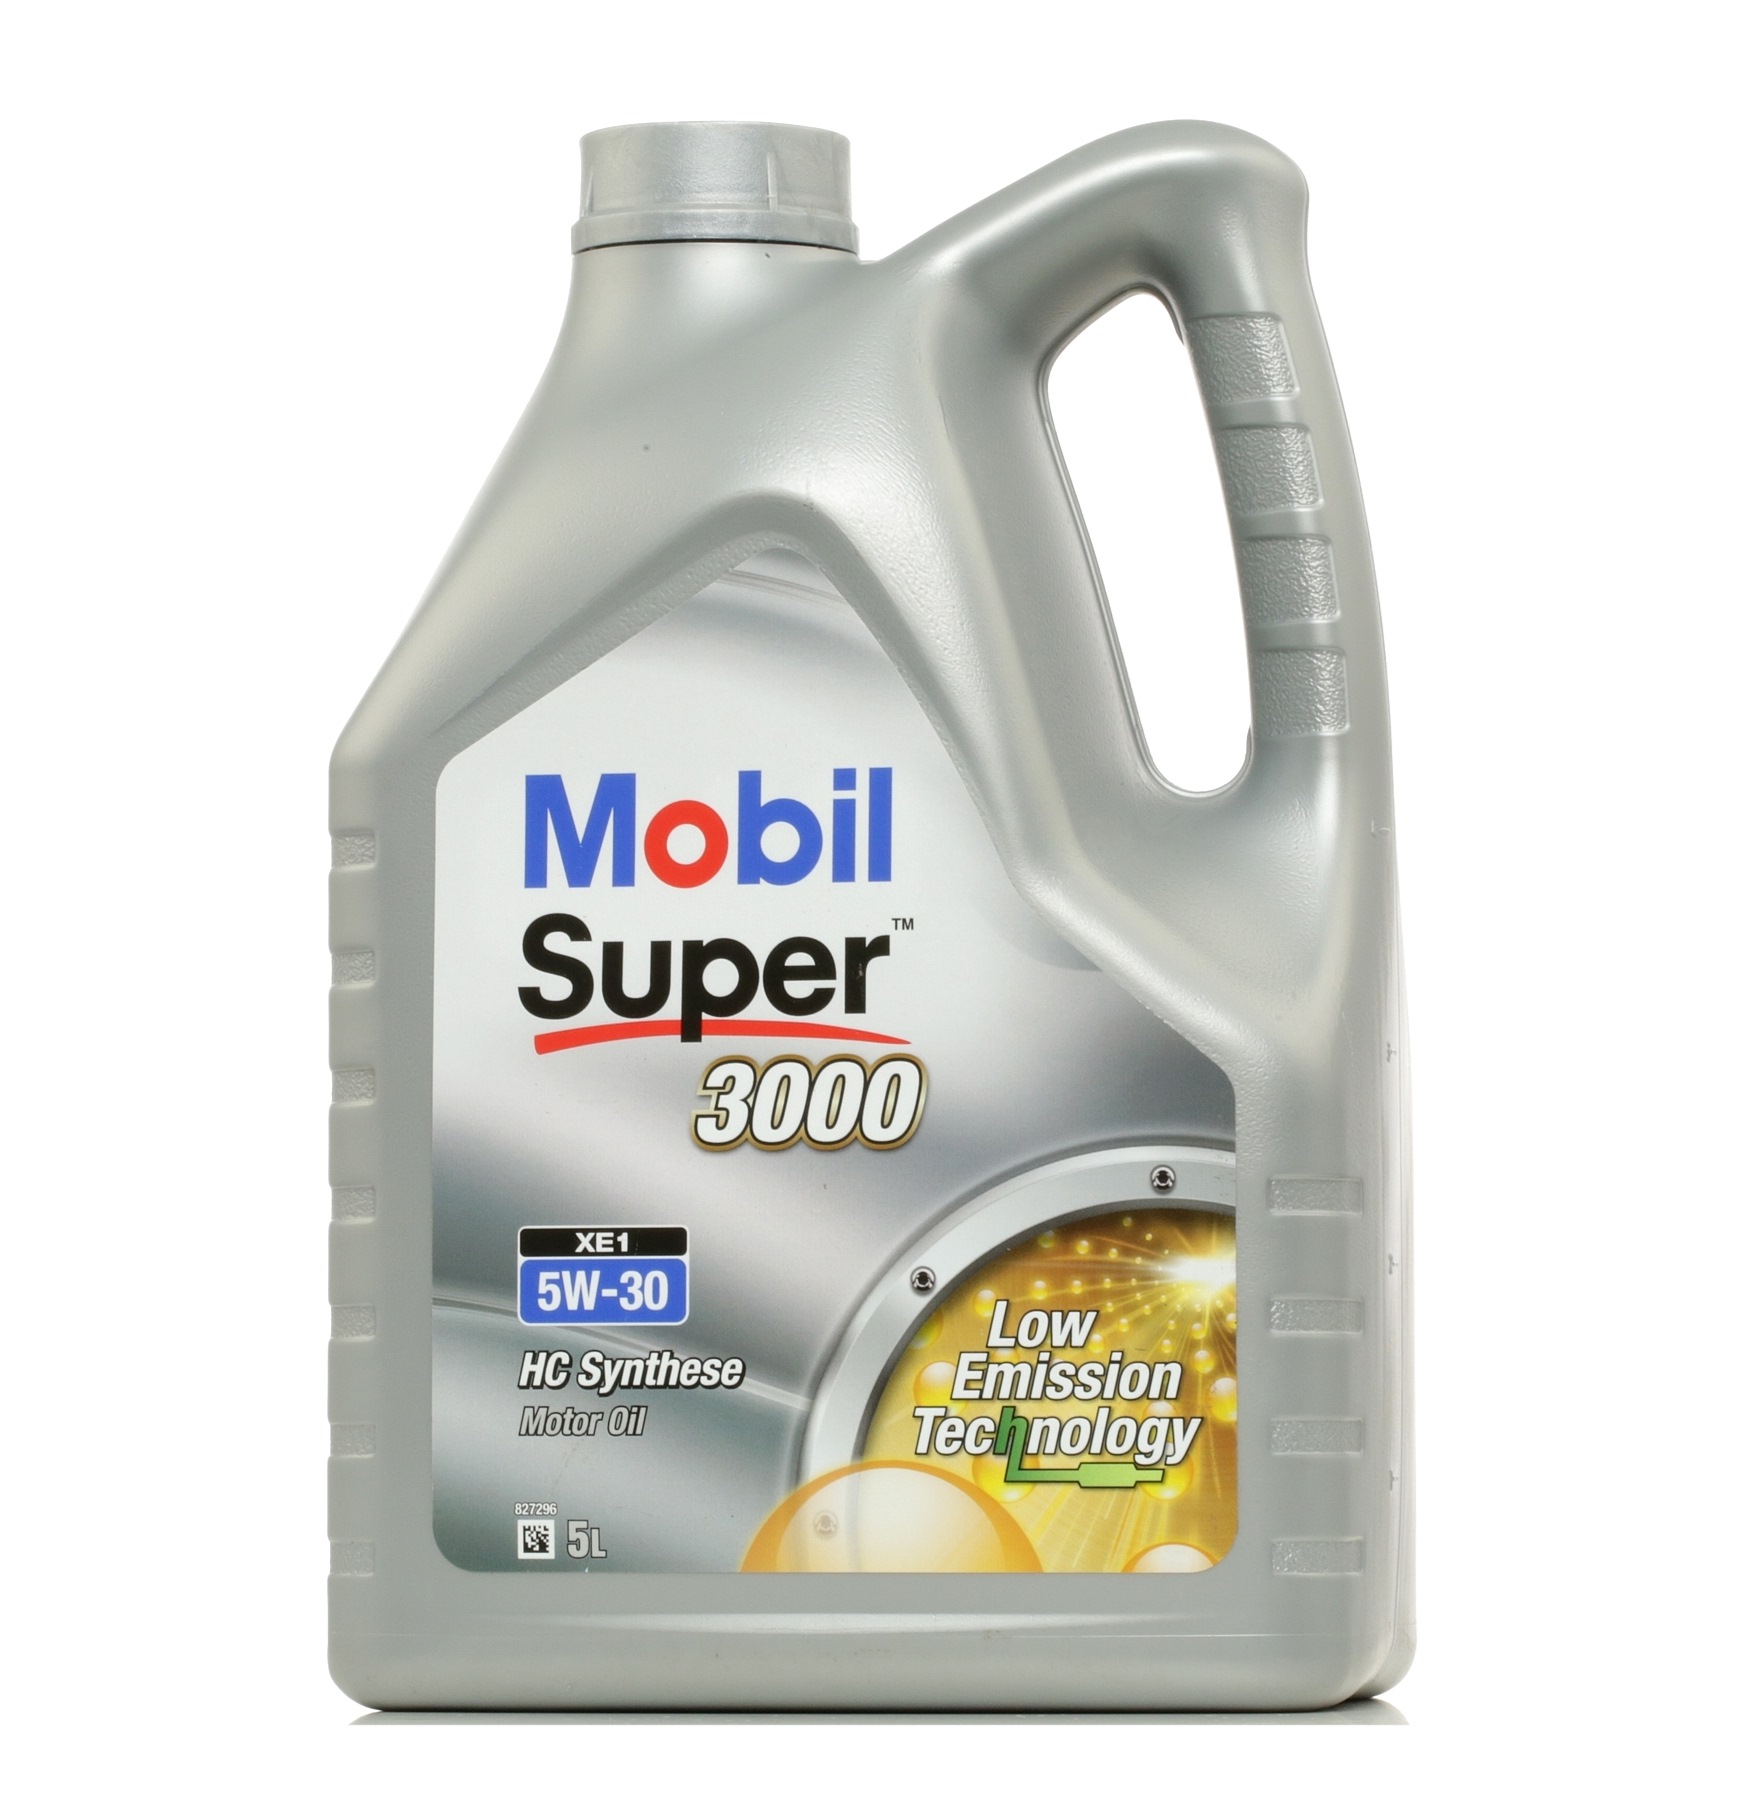 Kaufen Sie Auto Öl MOBIL 154758 Super, 3000 XE1 5W-30, 5l